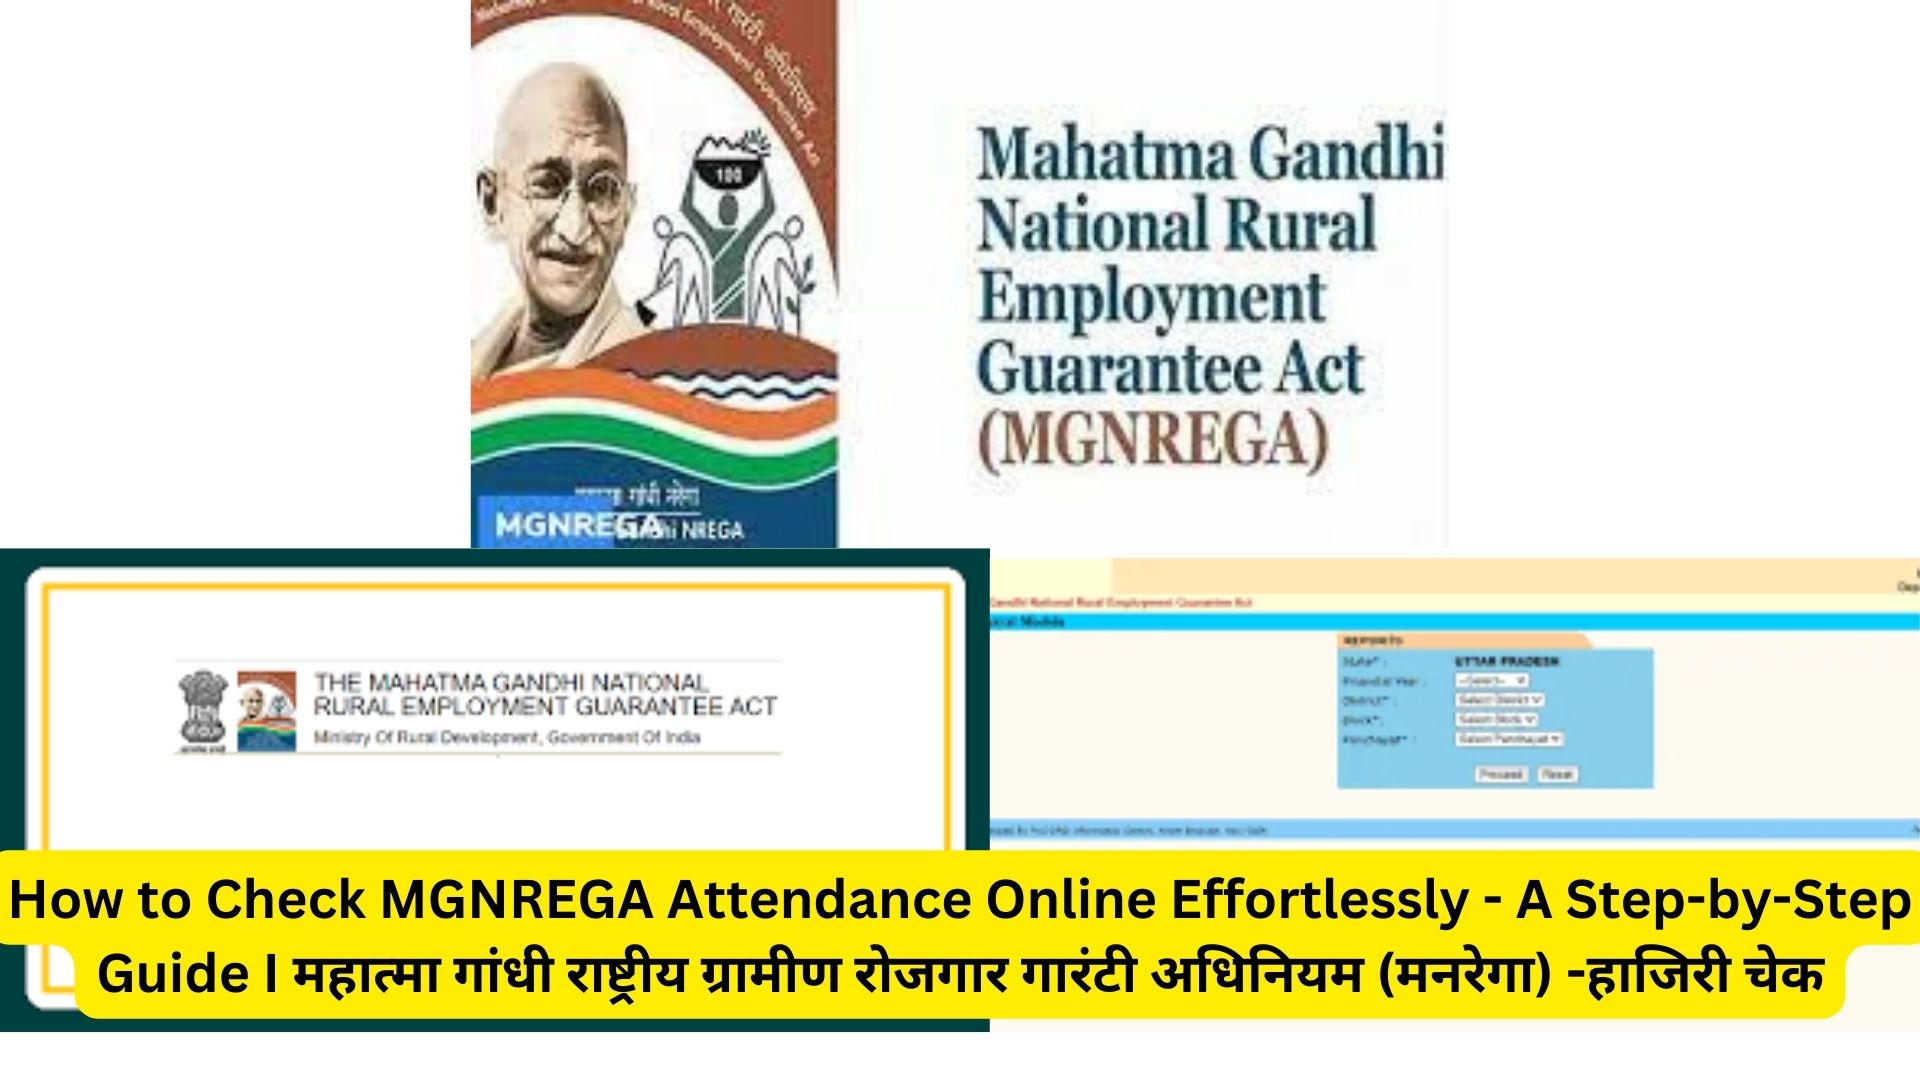 How to Check MGNREGA Attendance Online Effortlessly - A Step-by-Step Guide I महात्मा गांधी राष्ट्रीय ग्रामीण रोजगार गारंटी अधिनियम (मनरेगा) -हाजिरी चेक